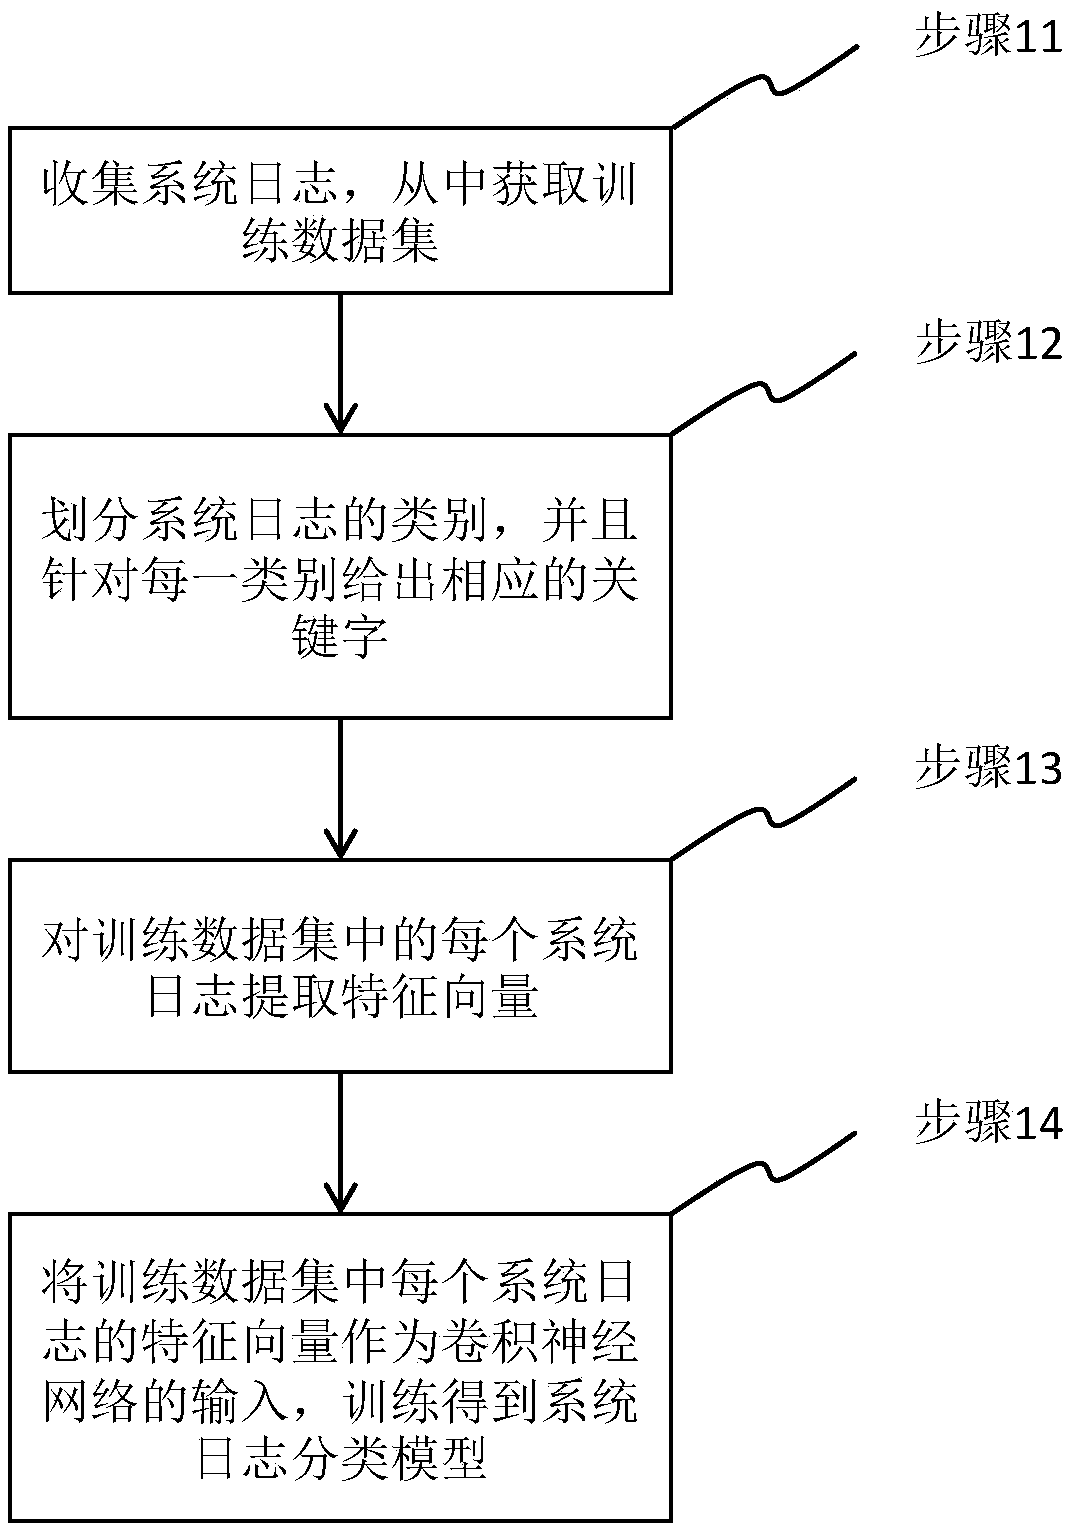 System-log classification method